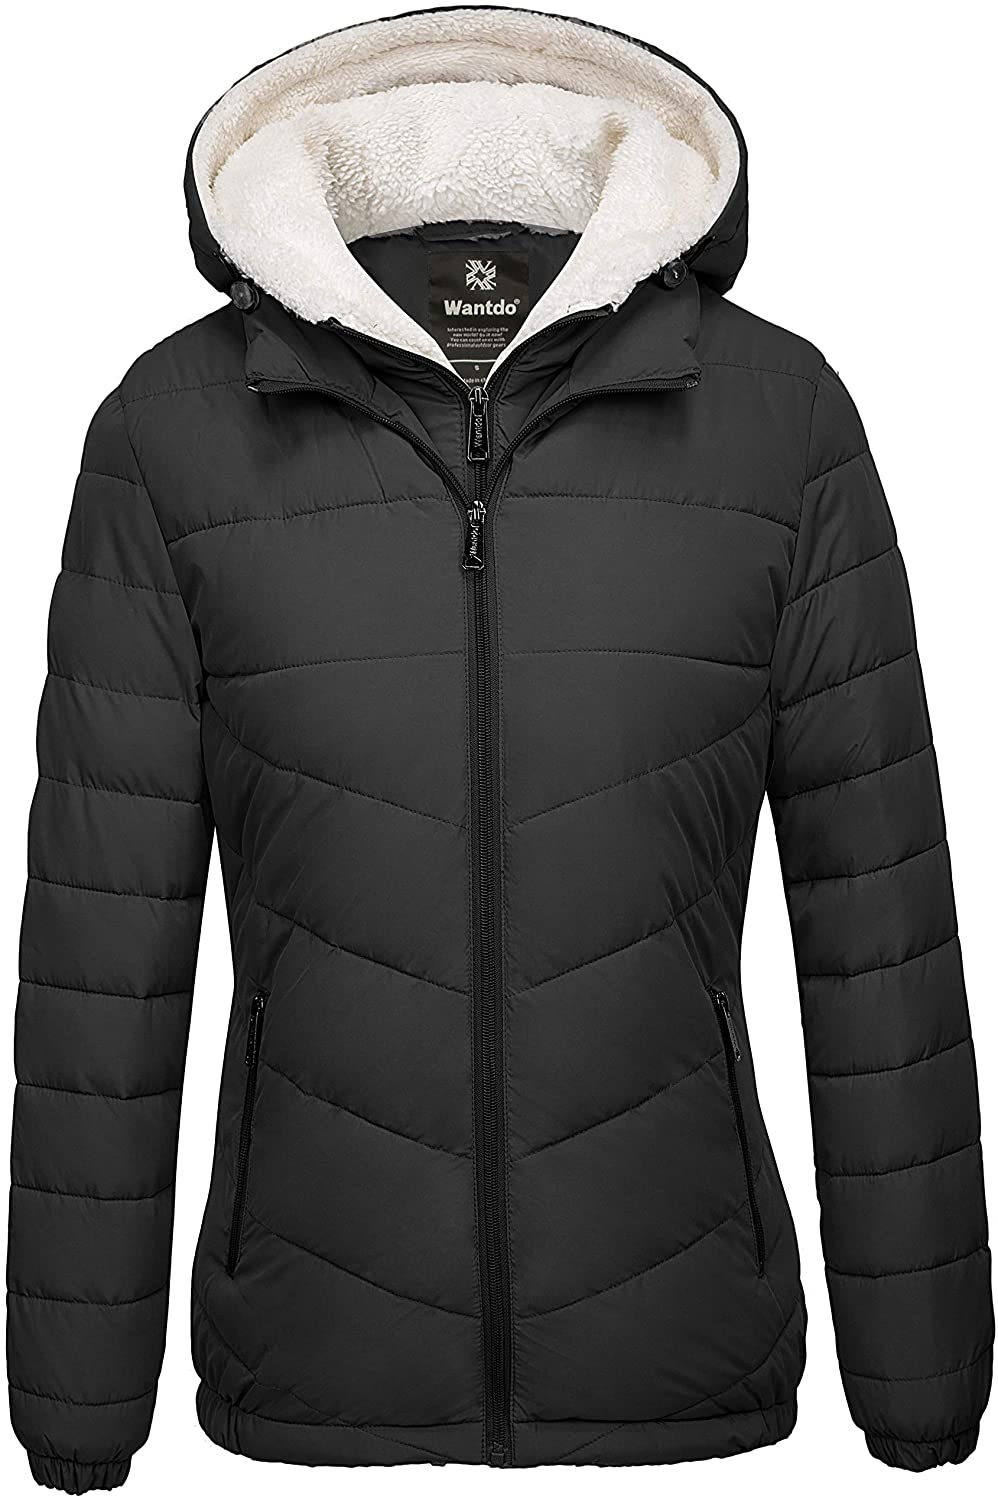 Wantdo Boy's Packable Lightweight Winter Coat Hooded Winter Jacket Quilted Puffer Jacket Waterproof Outerwear